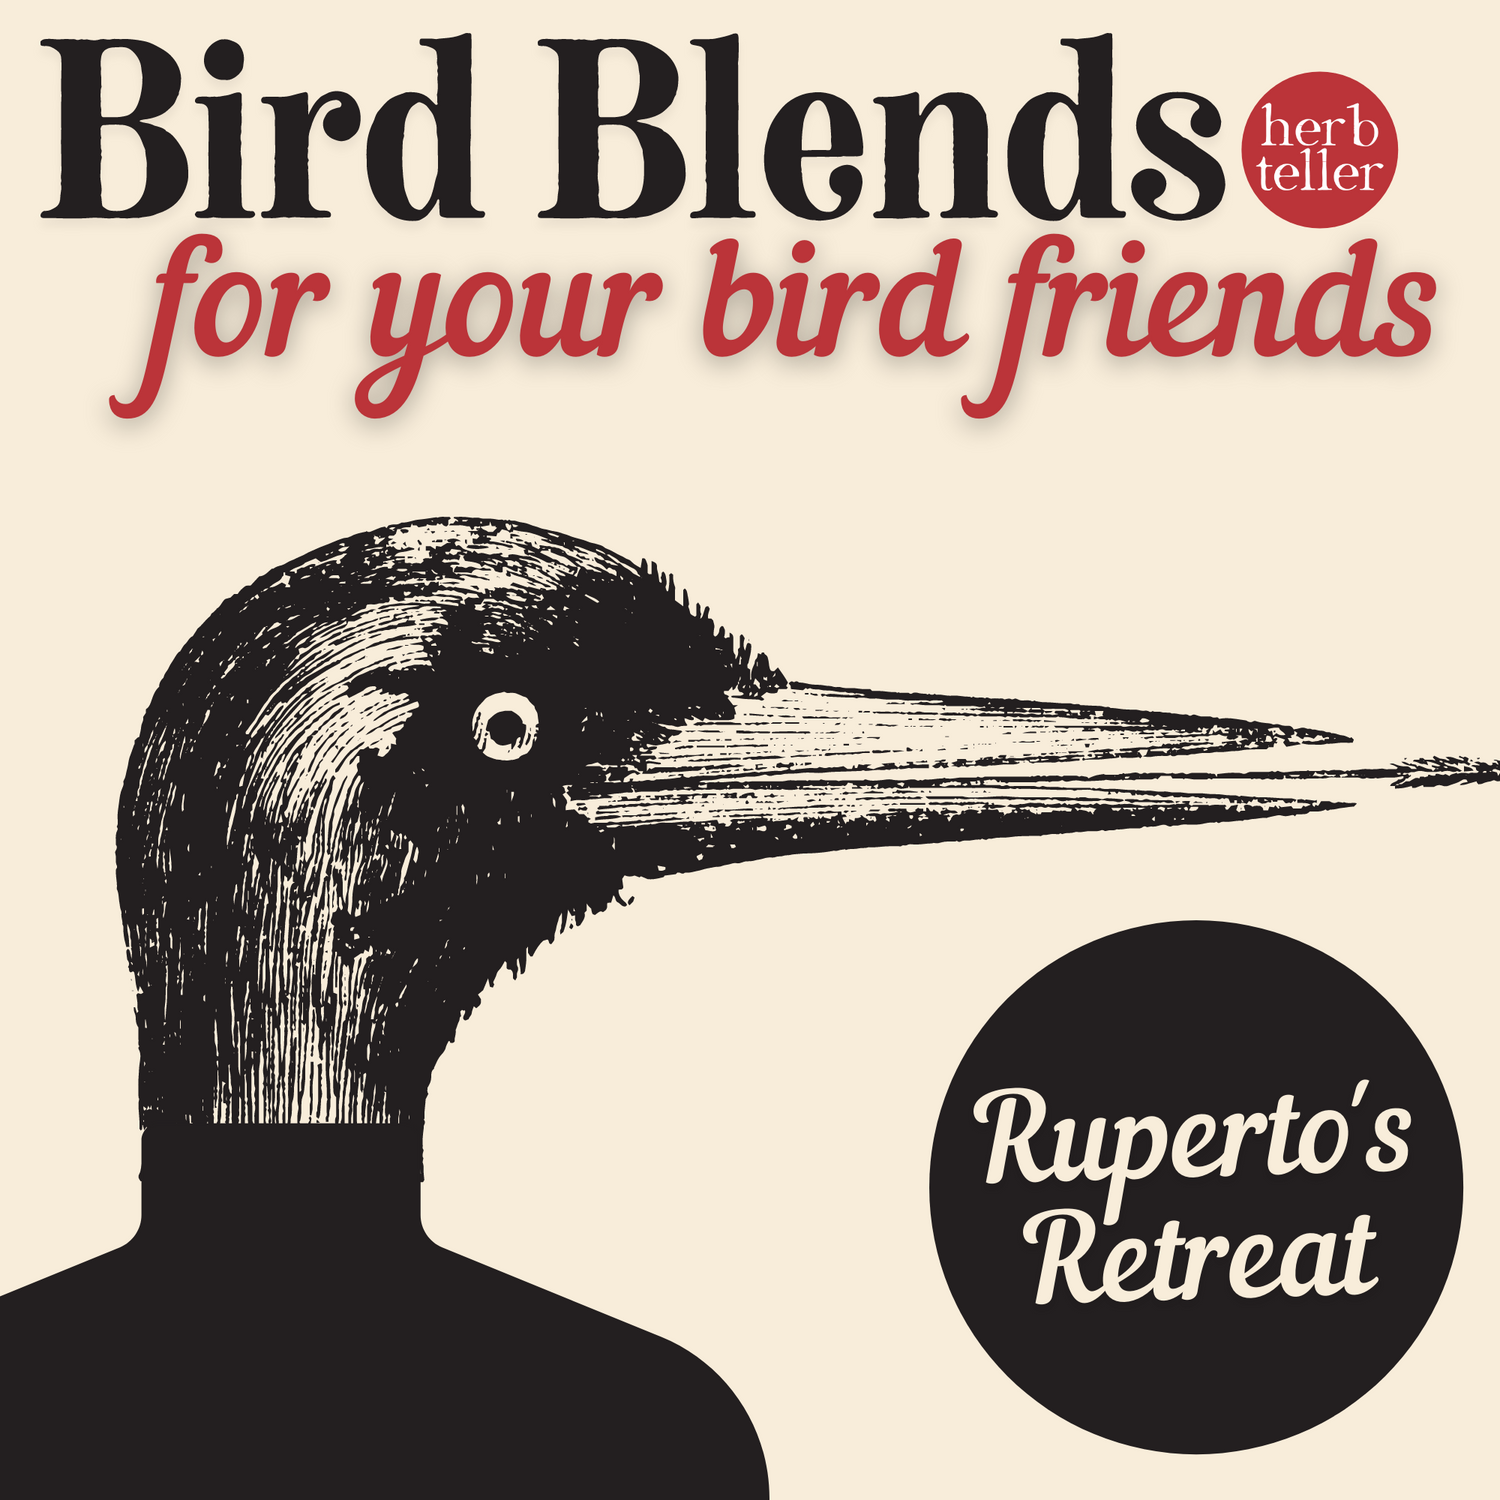 Ruperto's Retreat Pocket Feeder| Bird Blends for your Bird Friends | Herbal Bird Seed Mix - Original City Apothecary